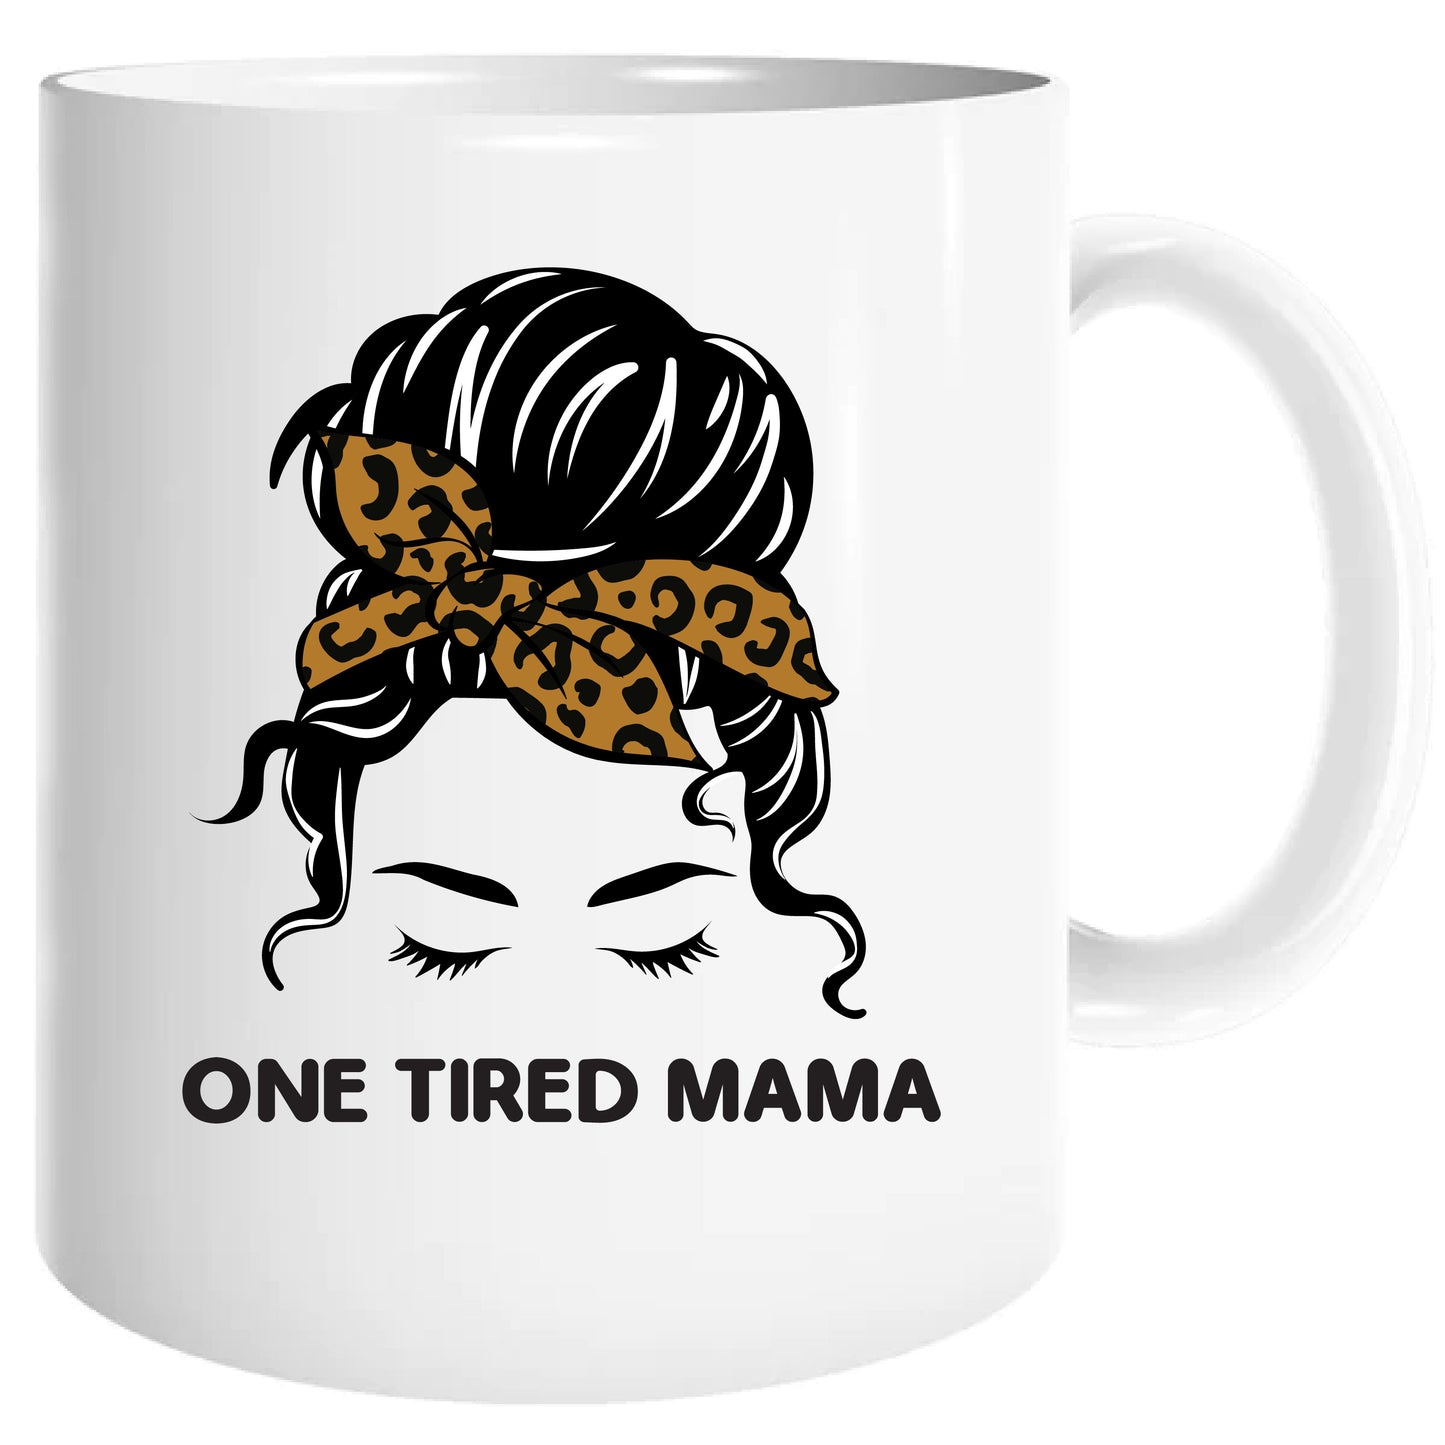 One Tired Mama mug